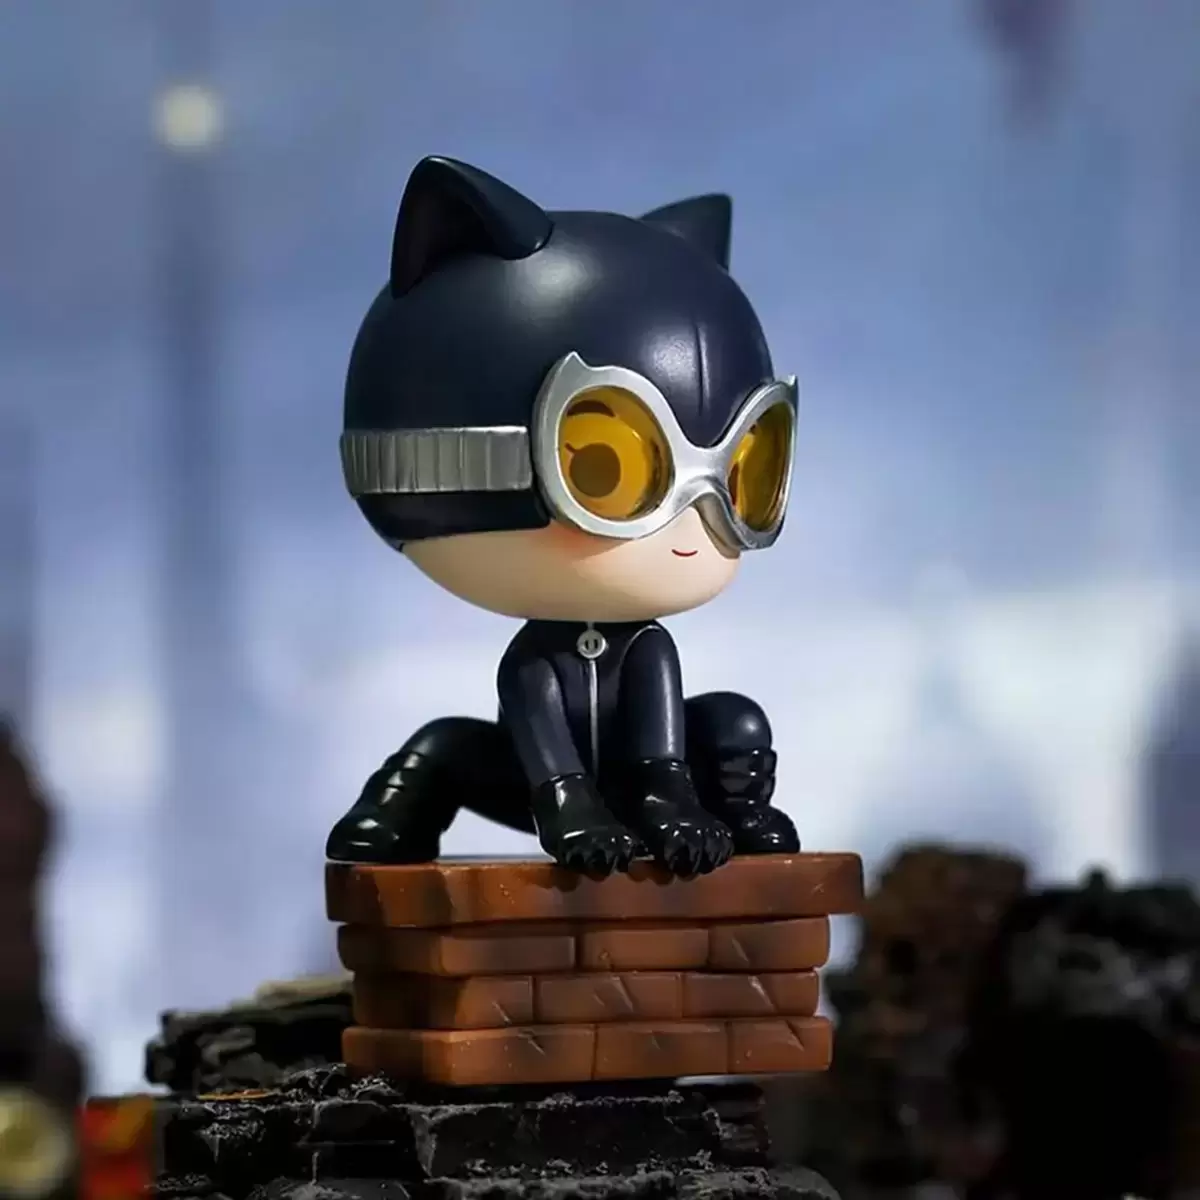 Justice league - Catwoman